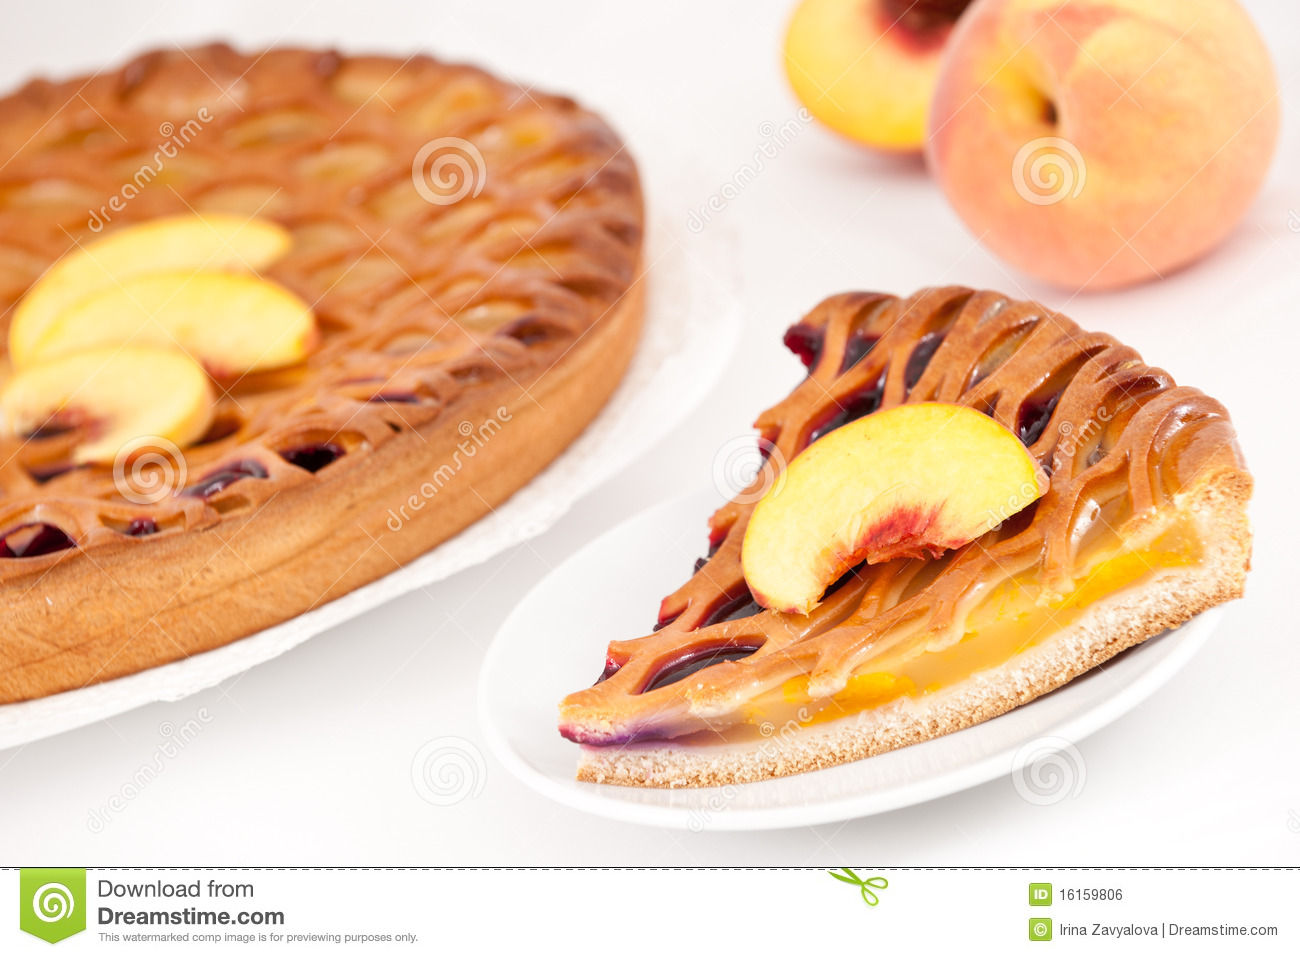 Peach Cherry Pie Royalty Free Stock Image   Image  16159806